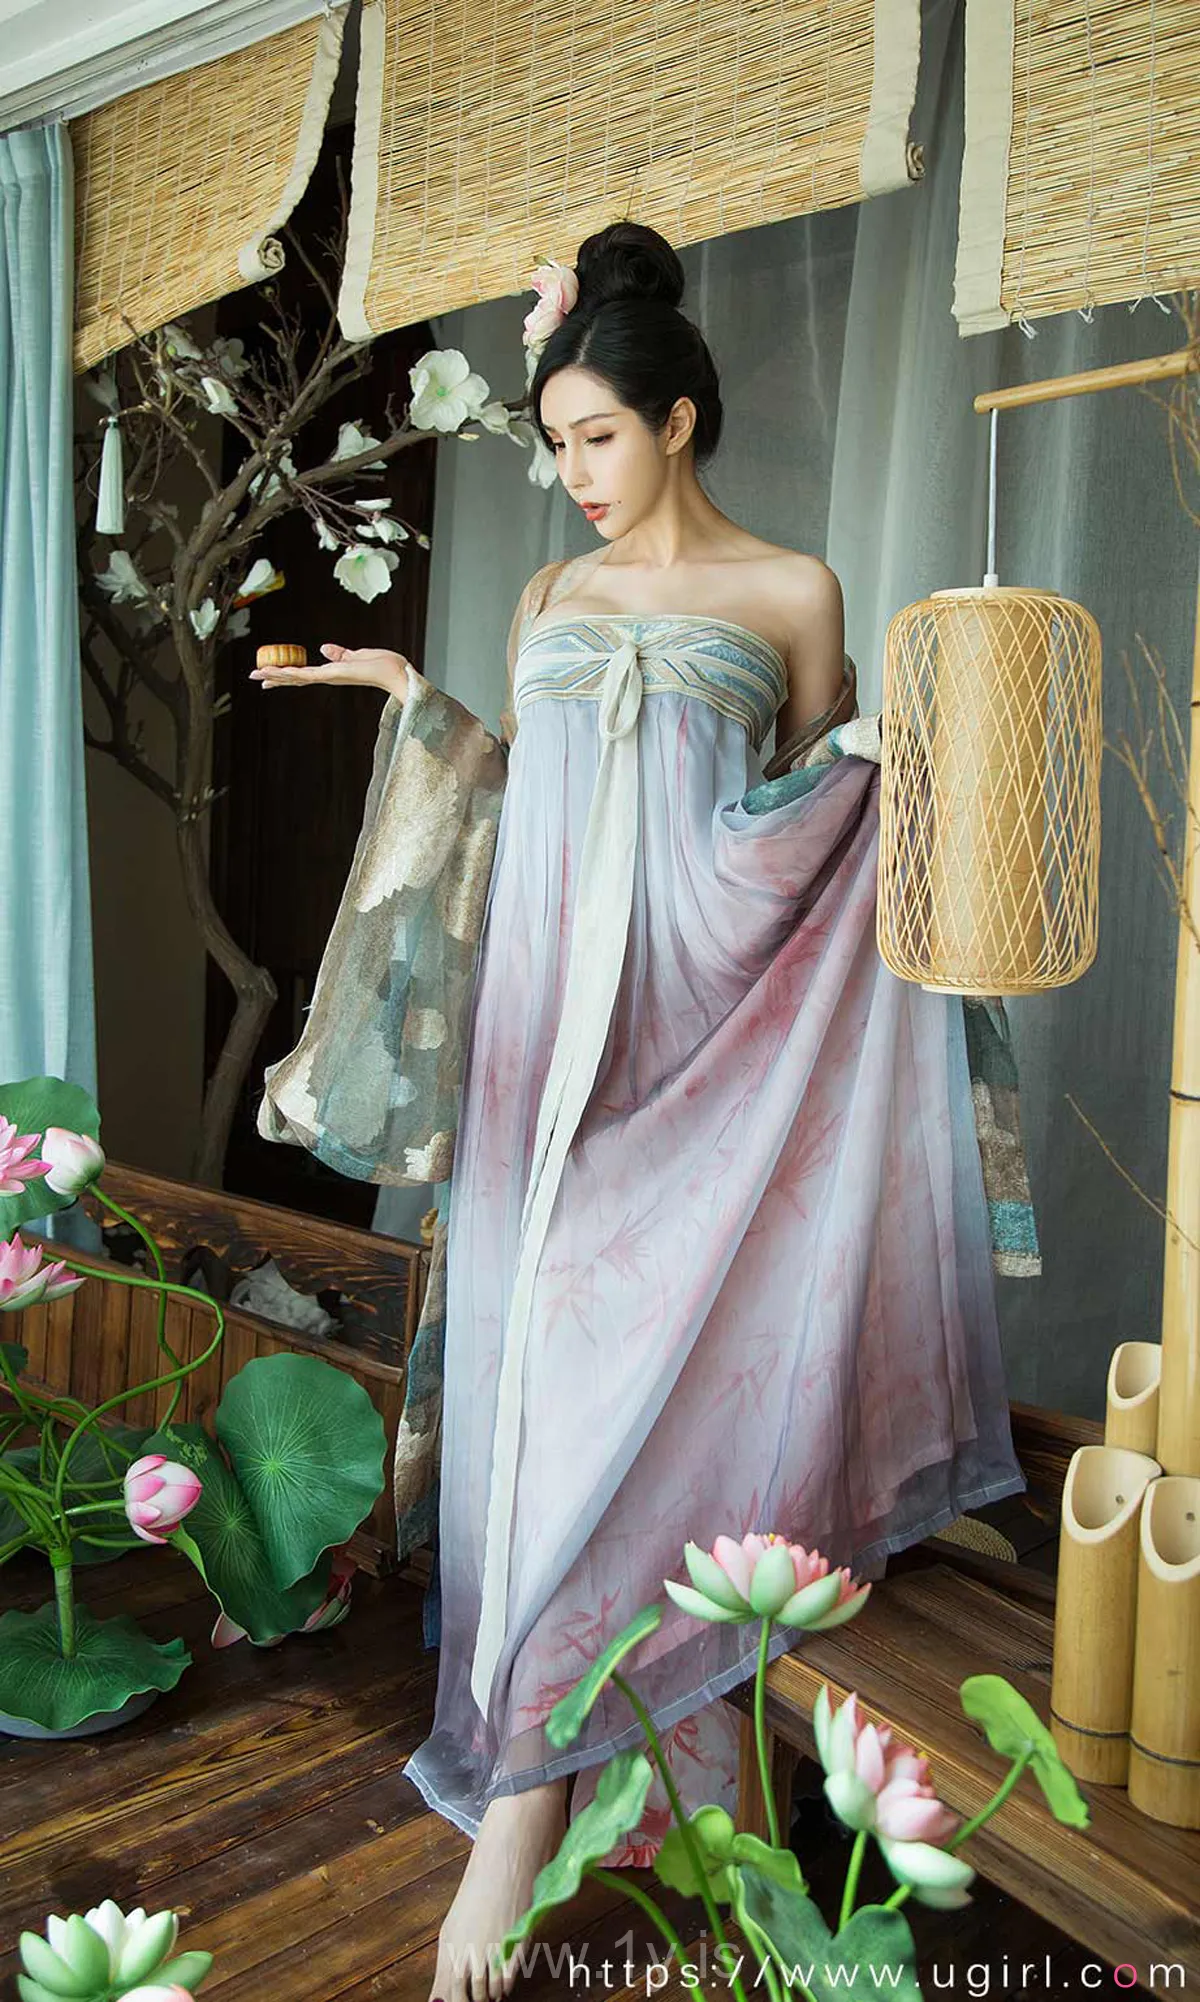 UGIRLS NO.2151 Slender Chinese Mature Princess 妮小妖七夕合辑织女梦